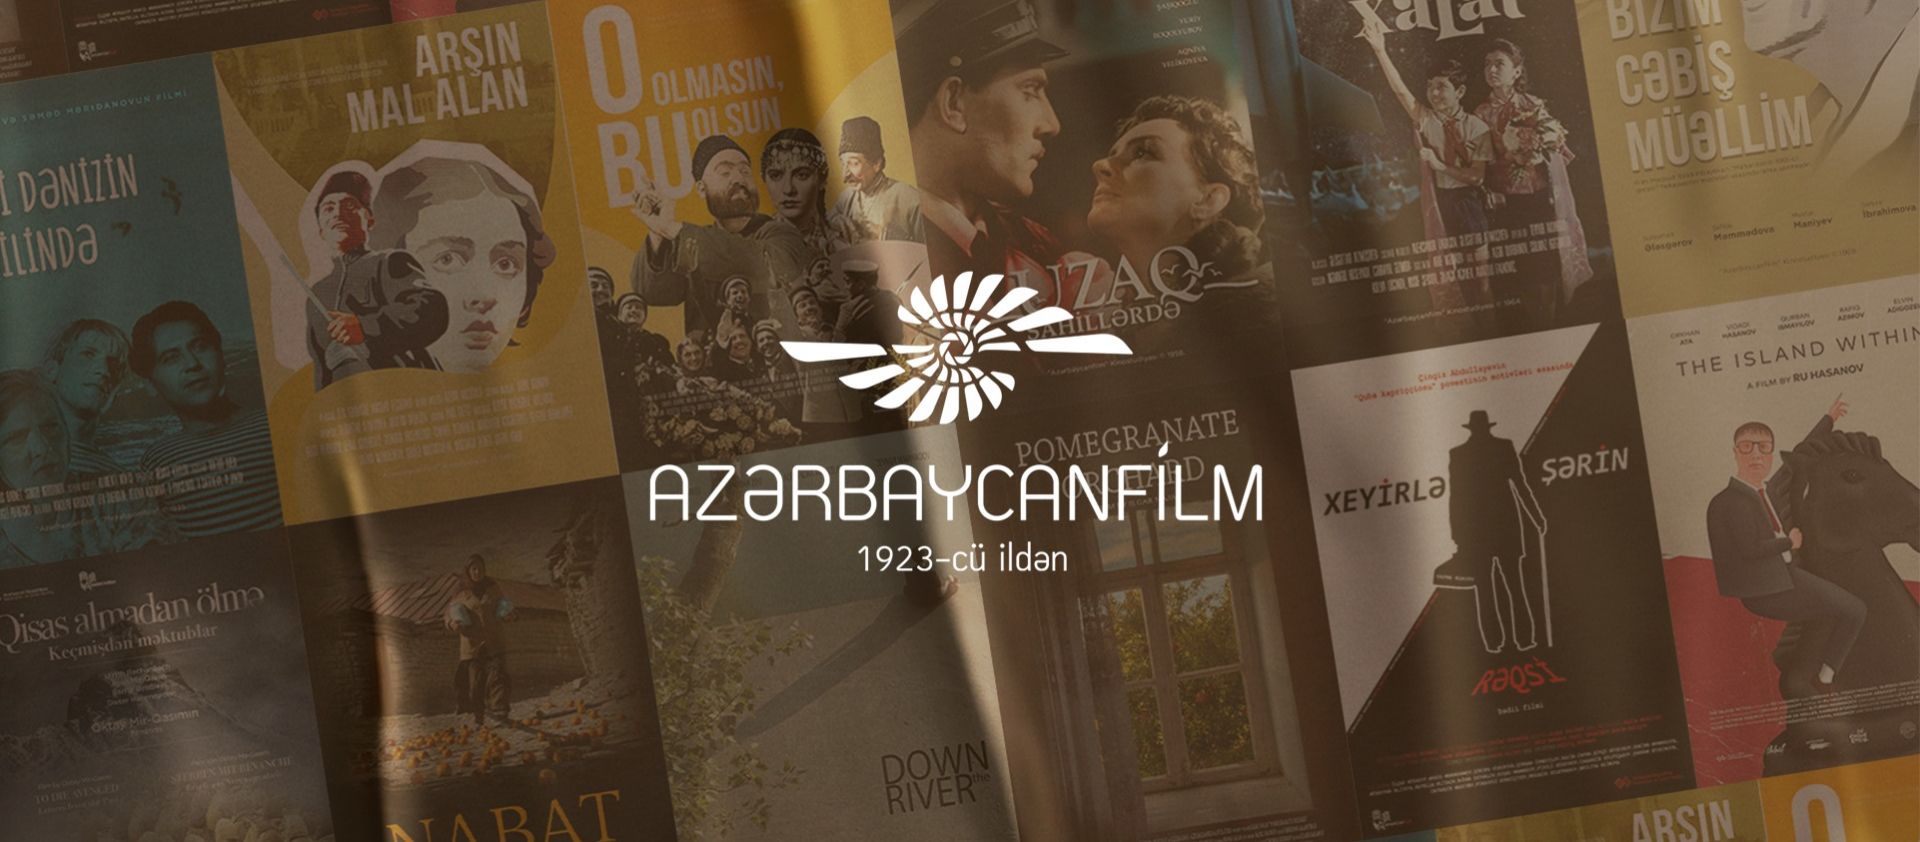 AzerbaijanFilm to arrange dazzling celebrations to mark own centenary [PHOTO]